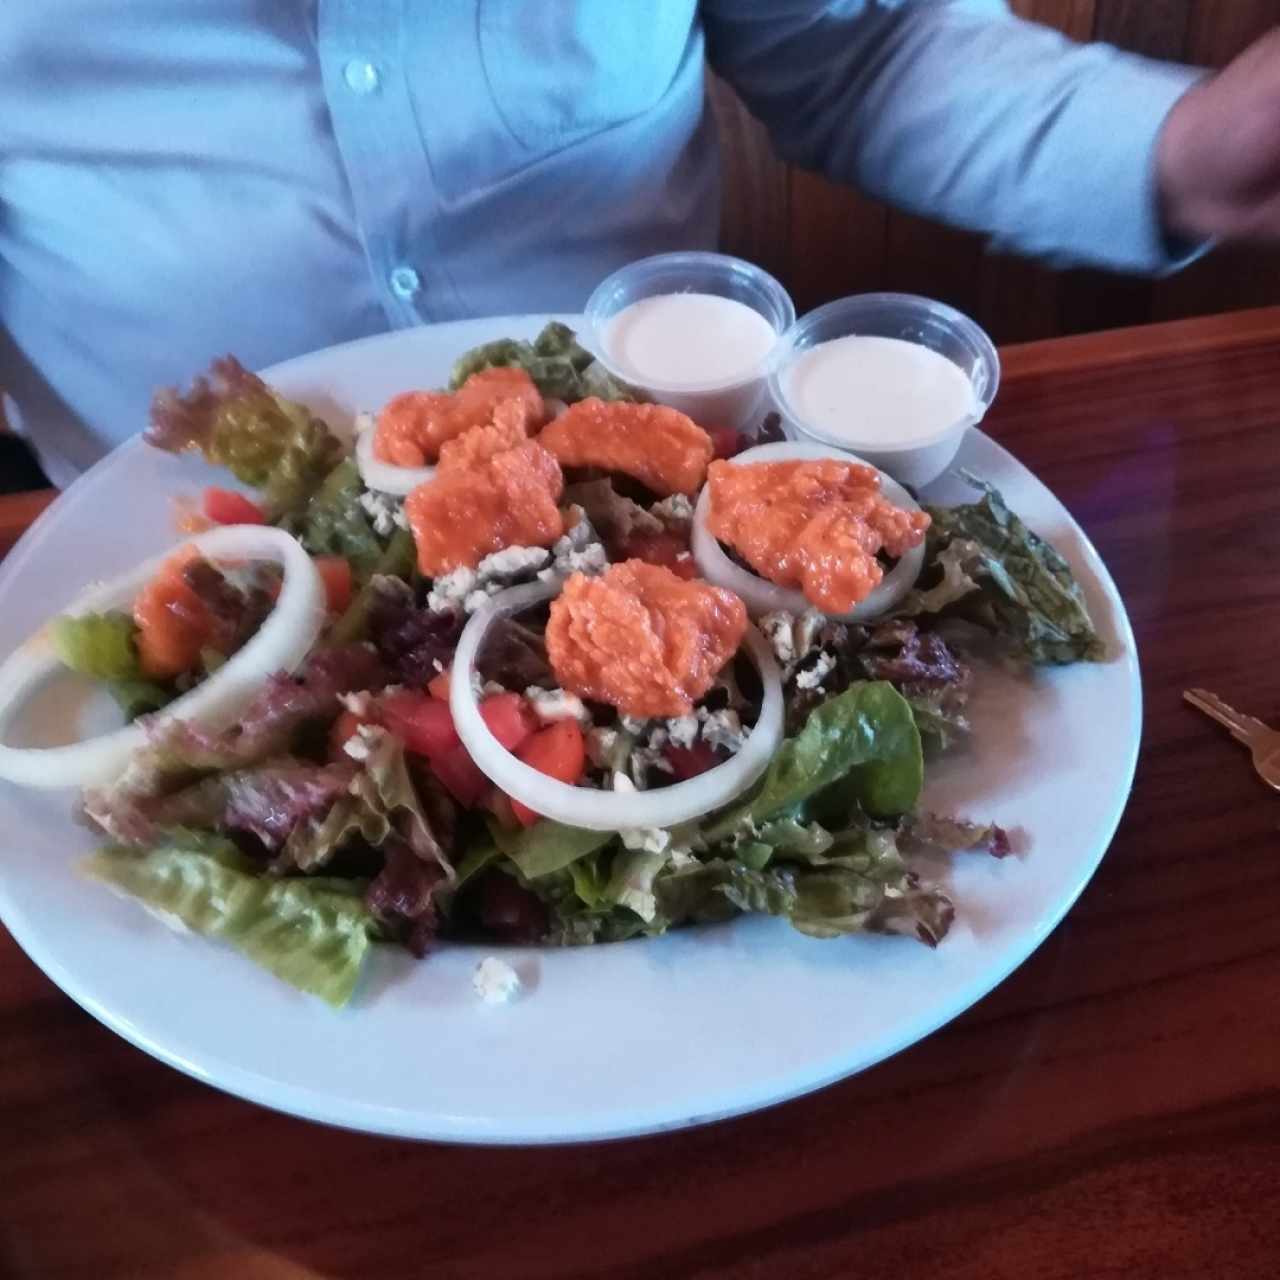 Chicken Buffalo salad